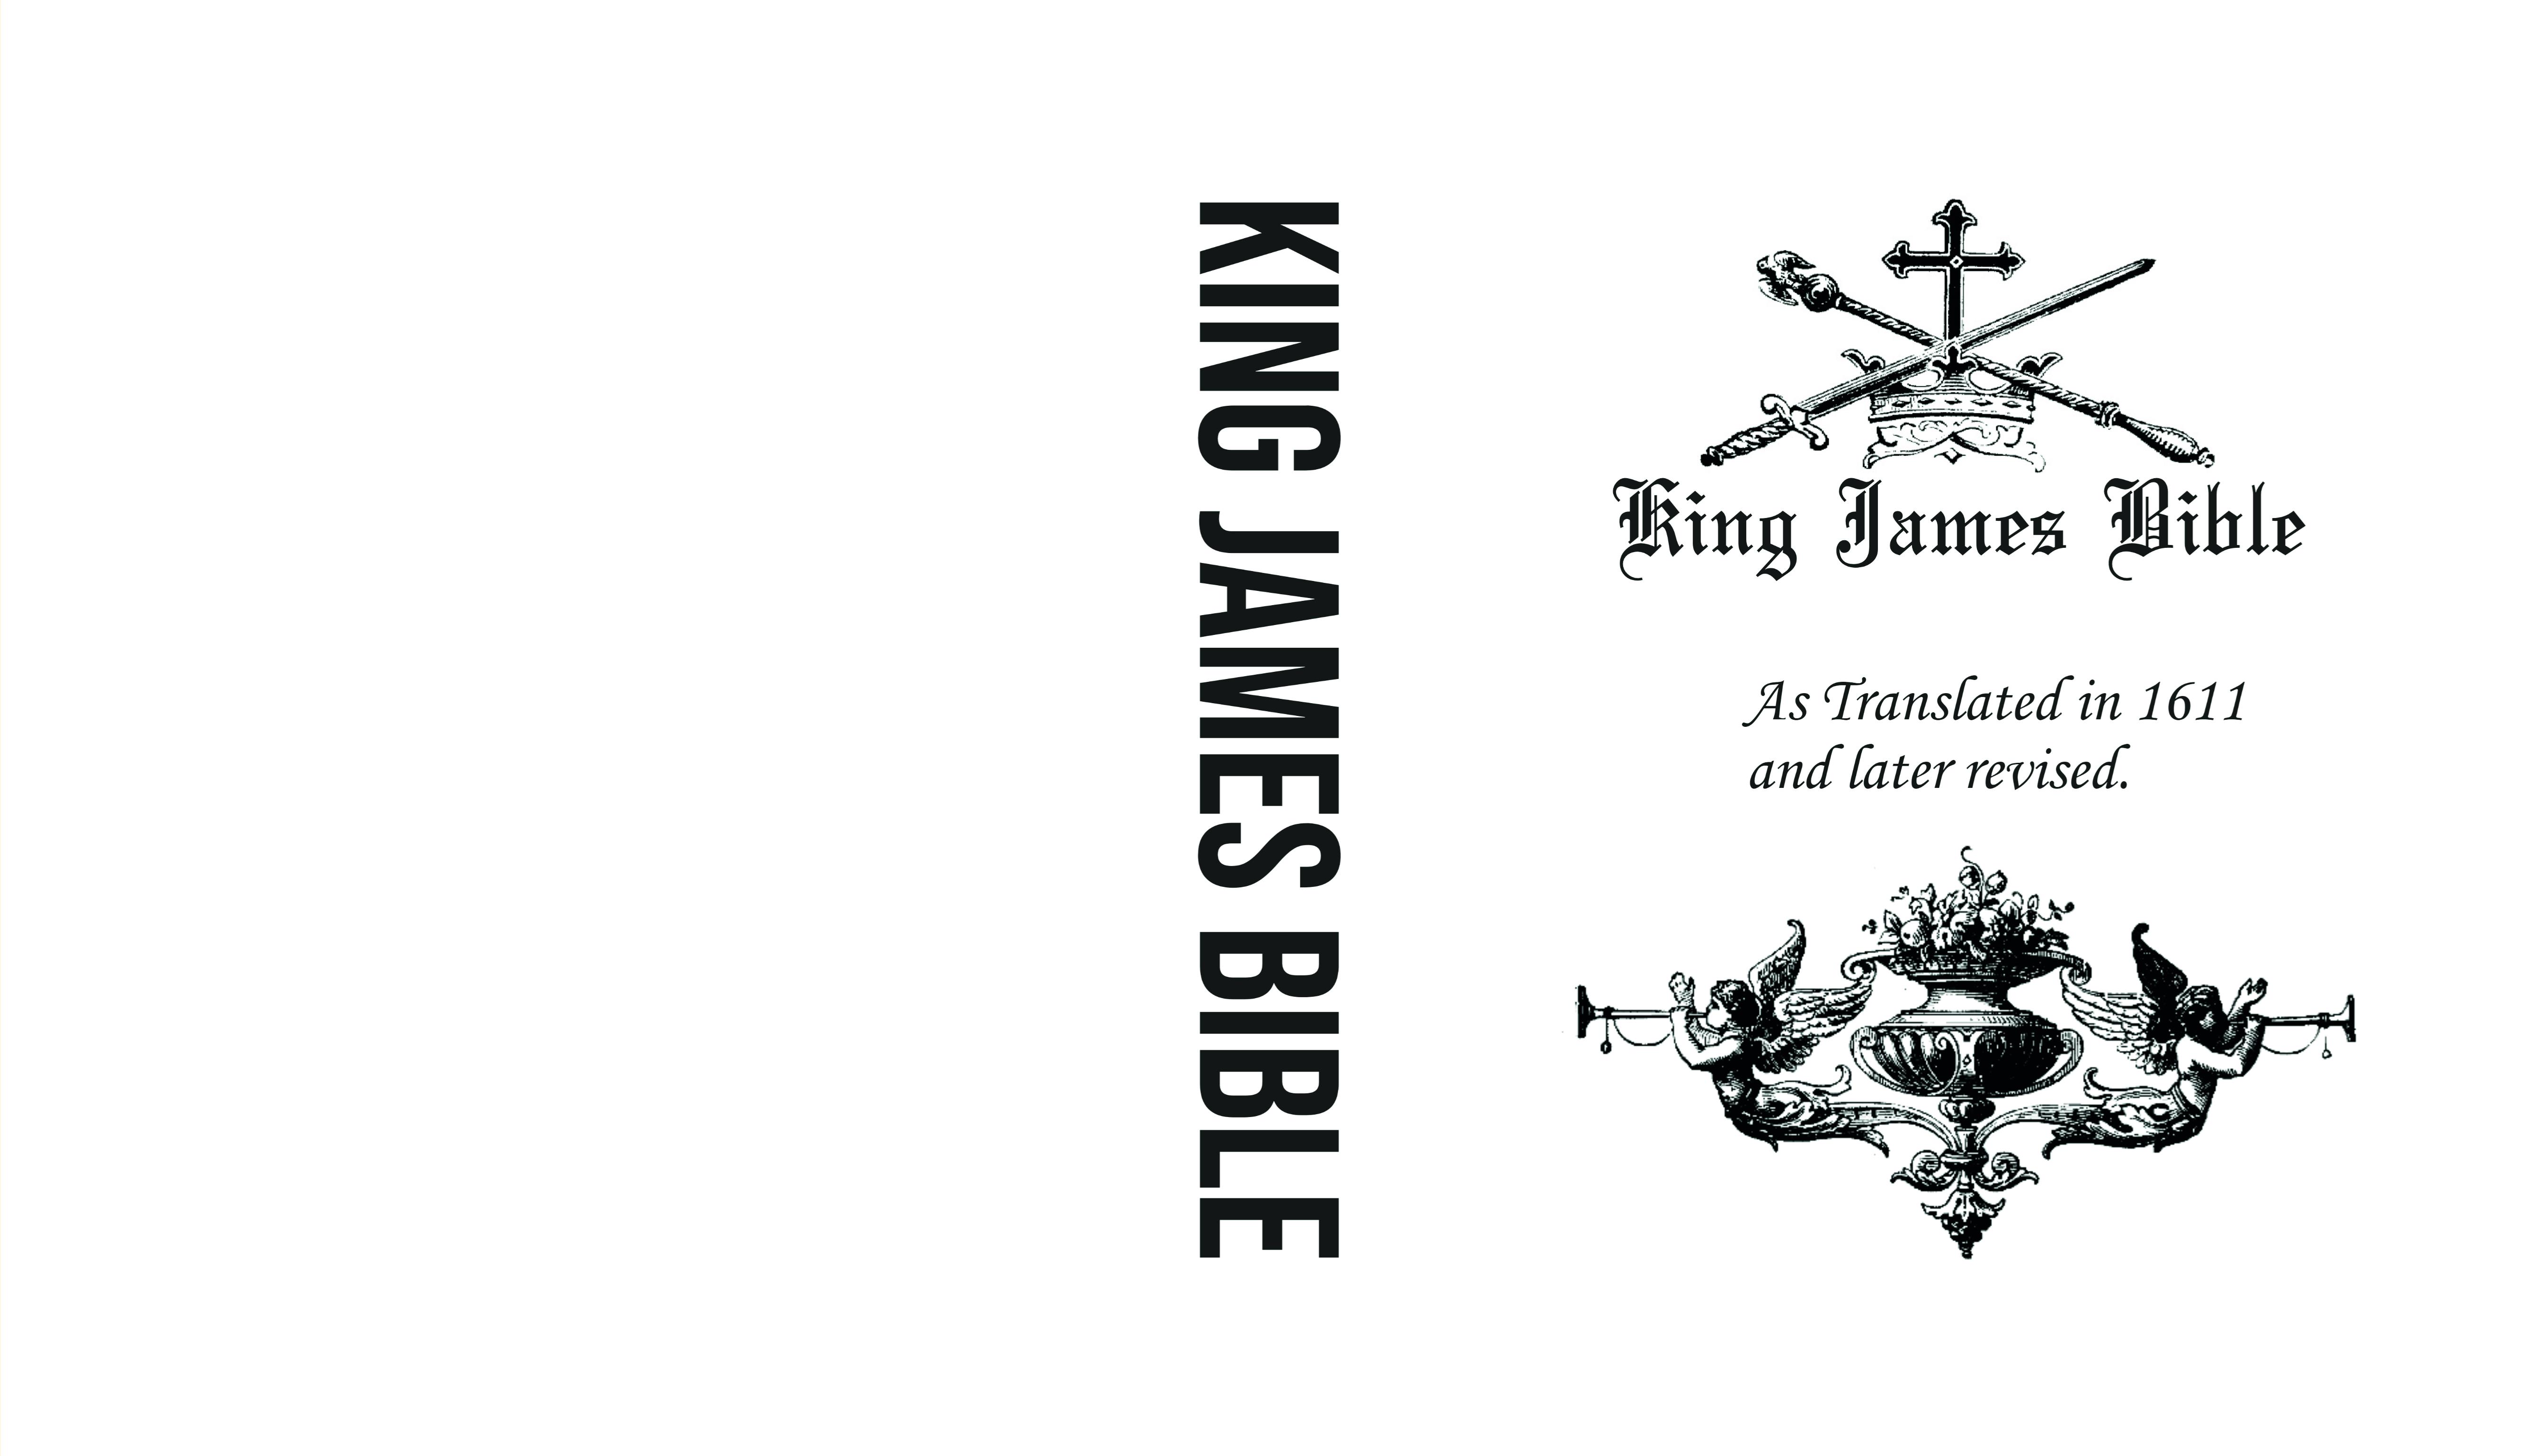 King James Bible  cover image